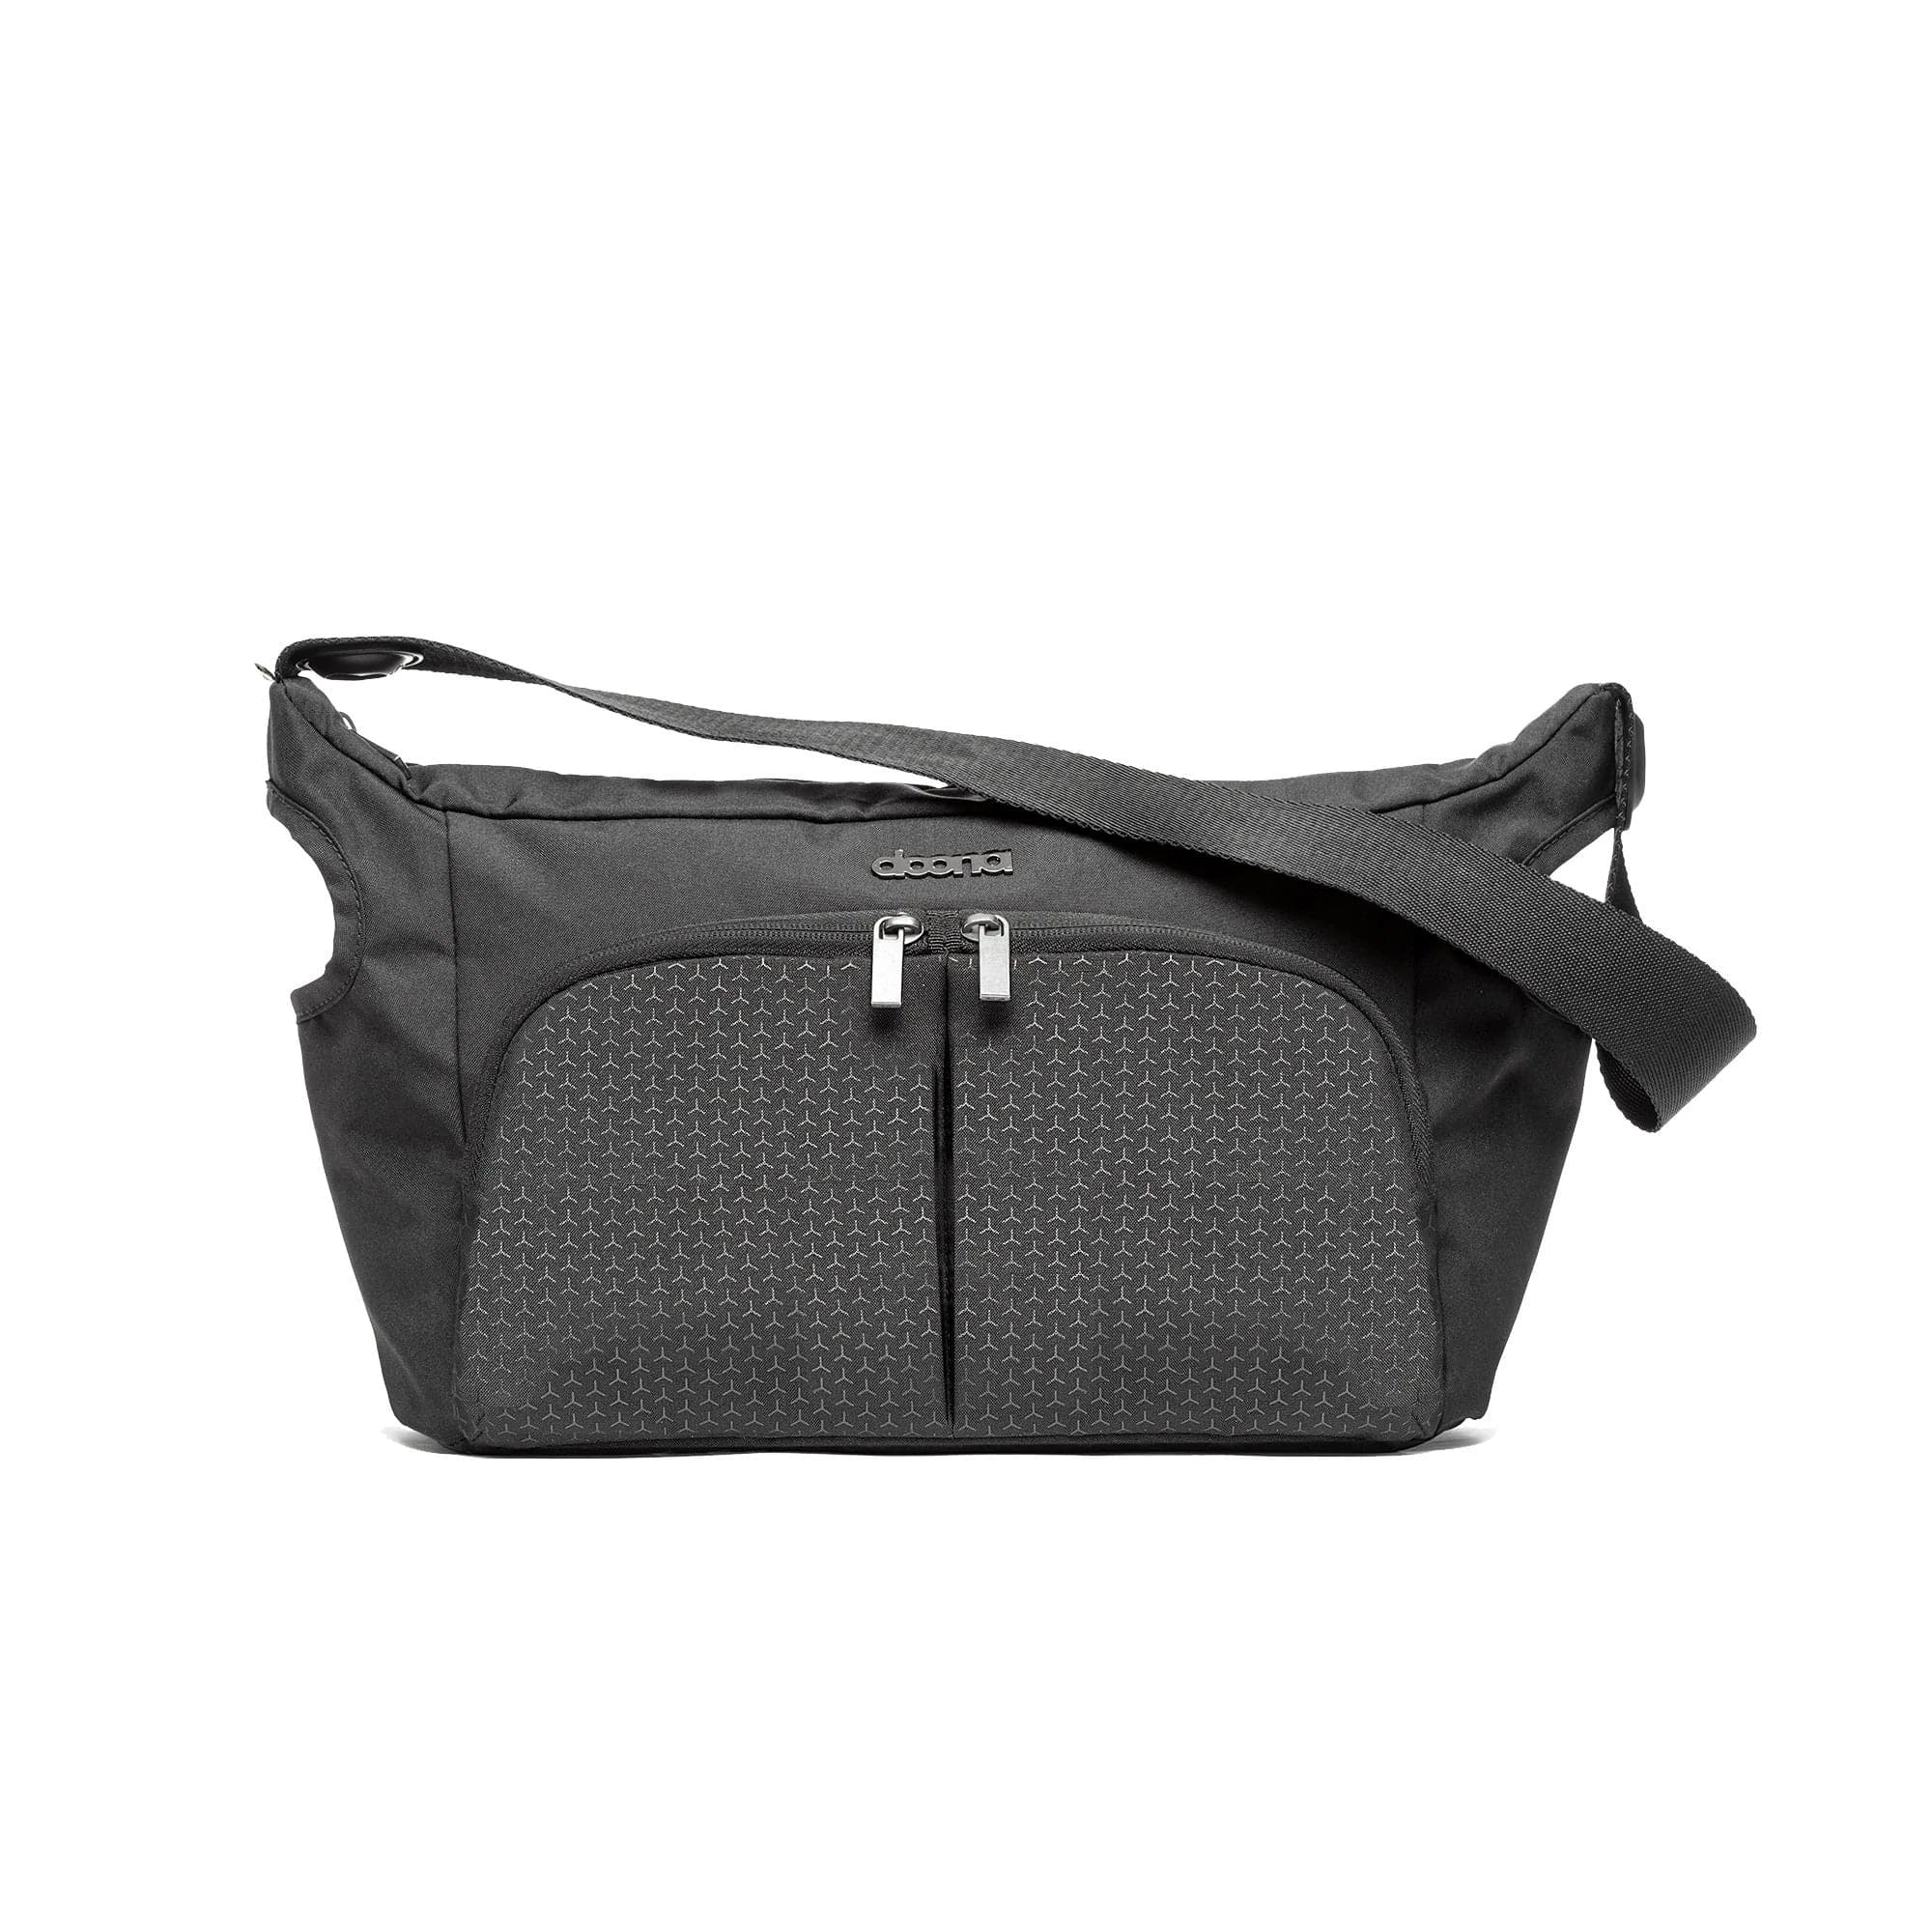 Doona Essentials Bag - Black - For Your Little One